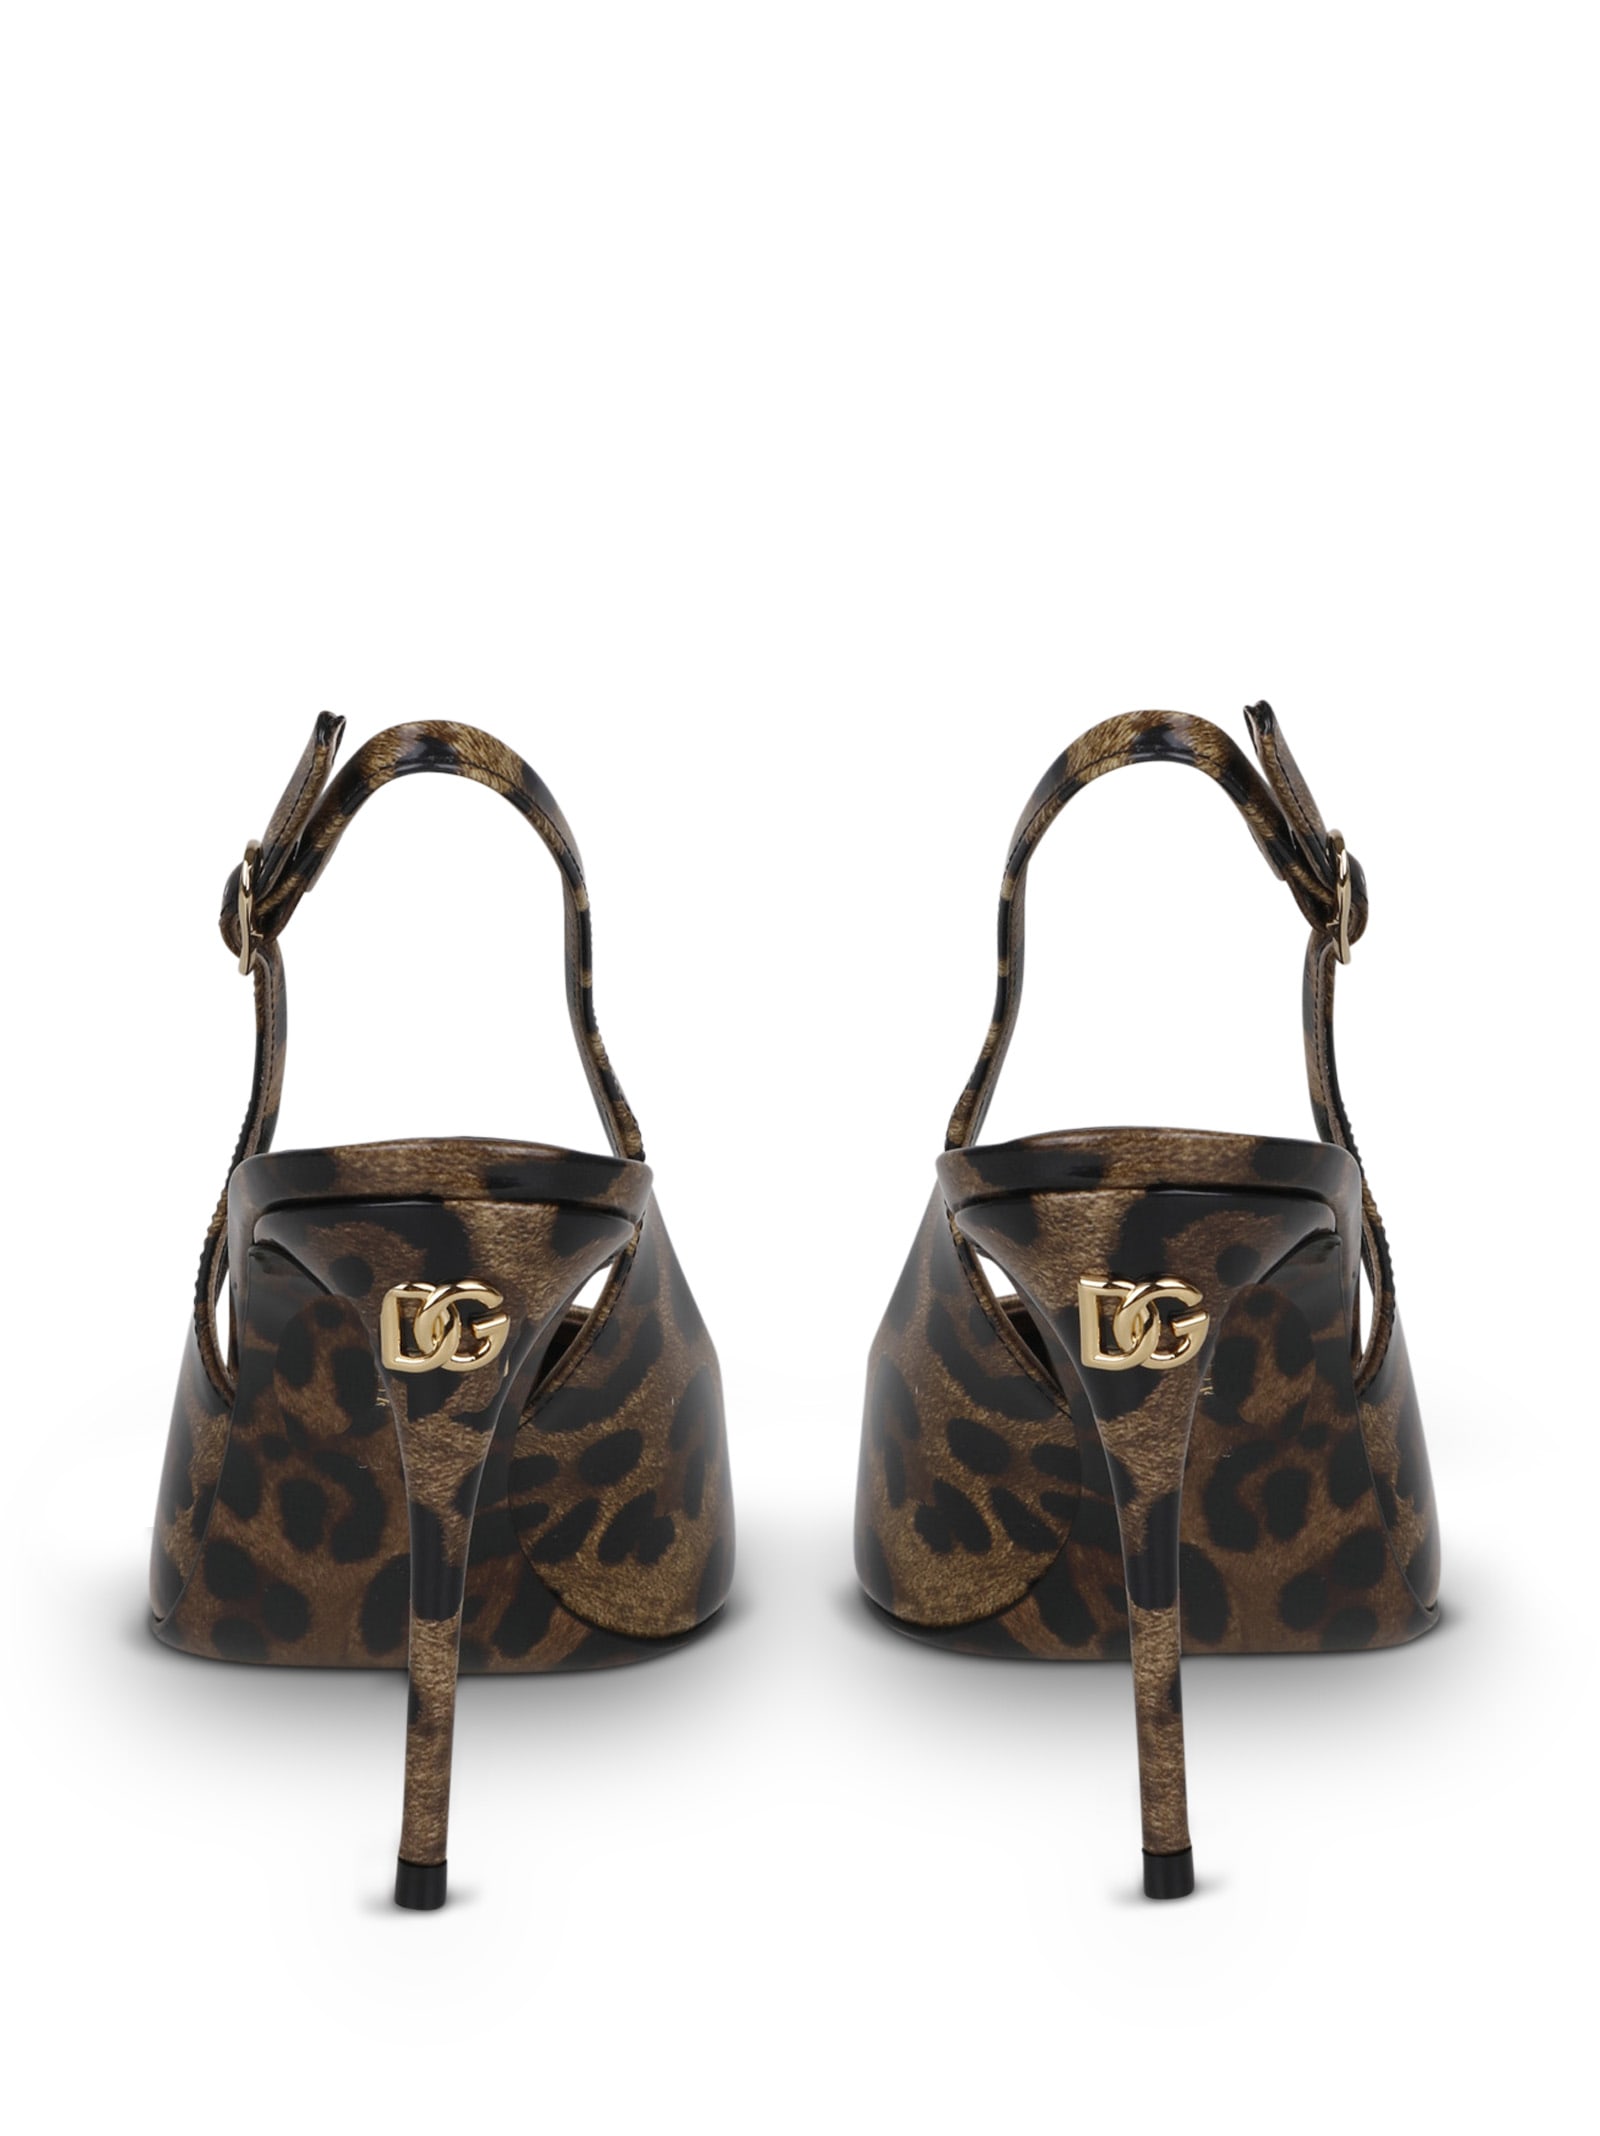 Shop Dolce & Gabbana Kim Leopard-print Slingback Pumps